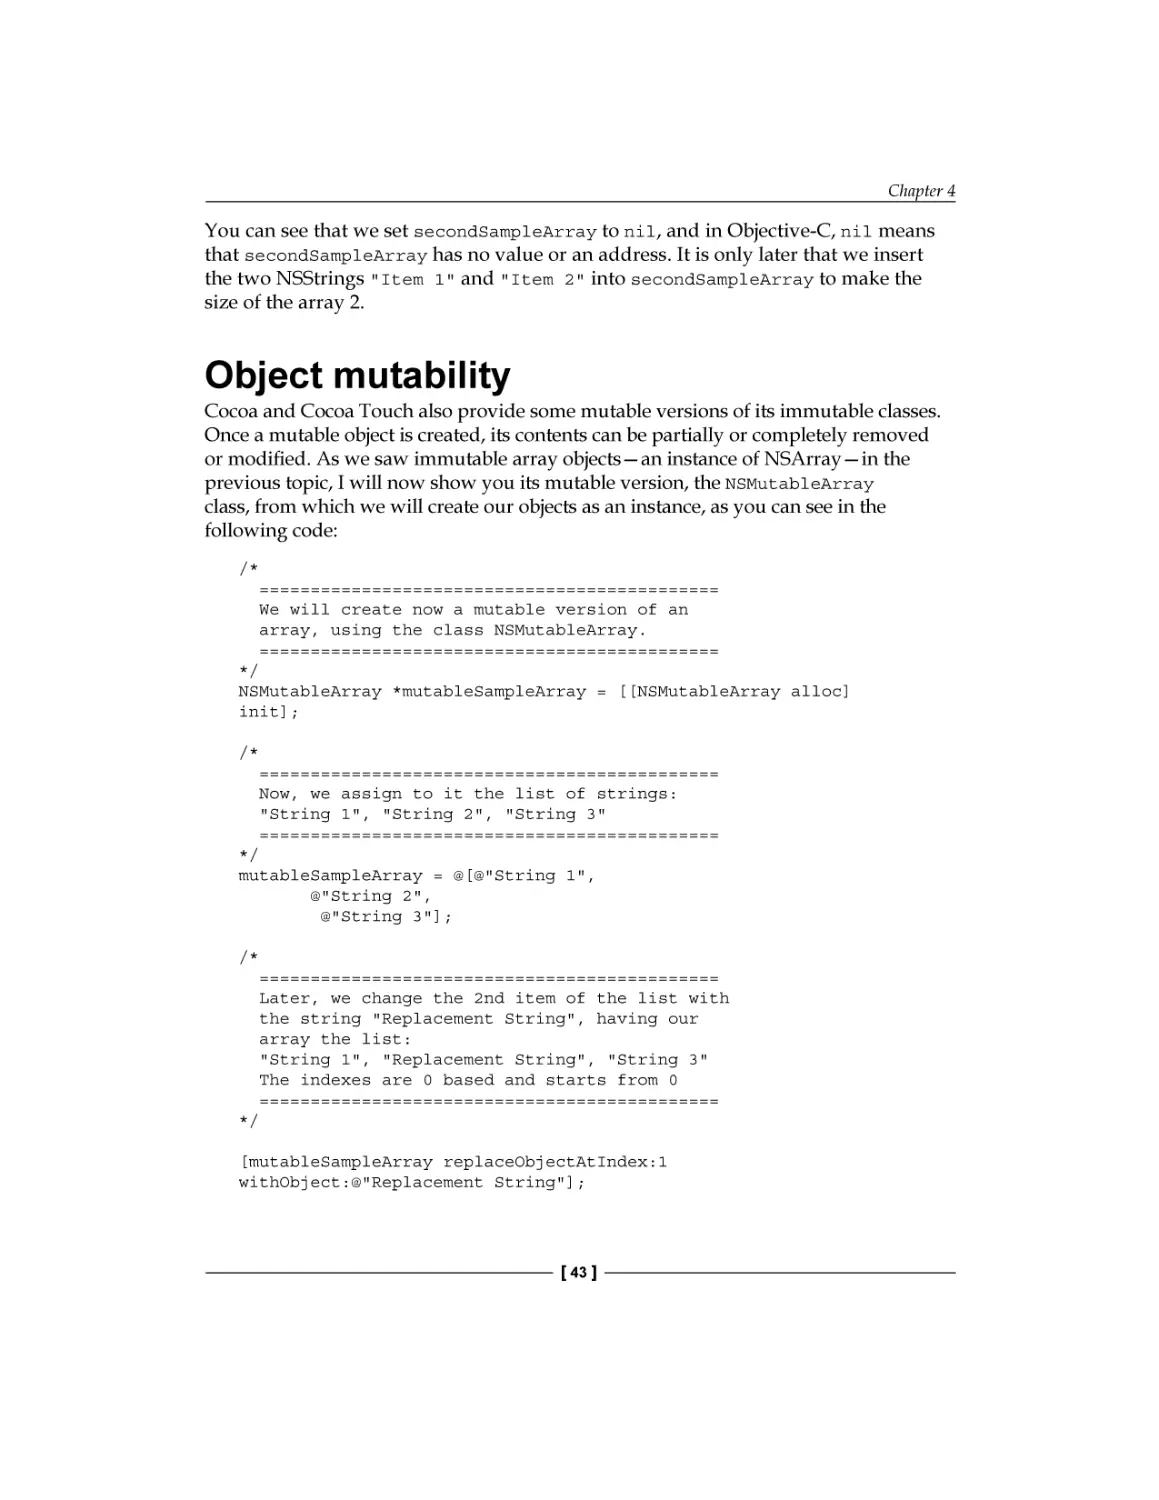 Object mutability